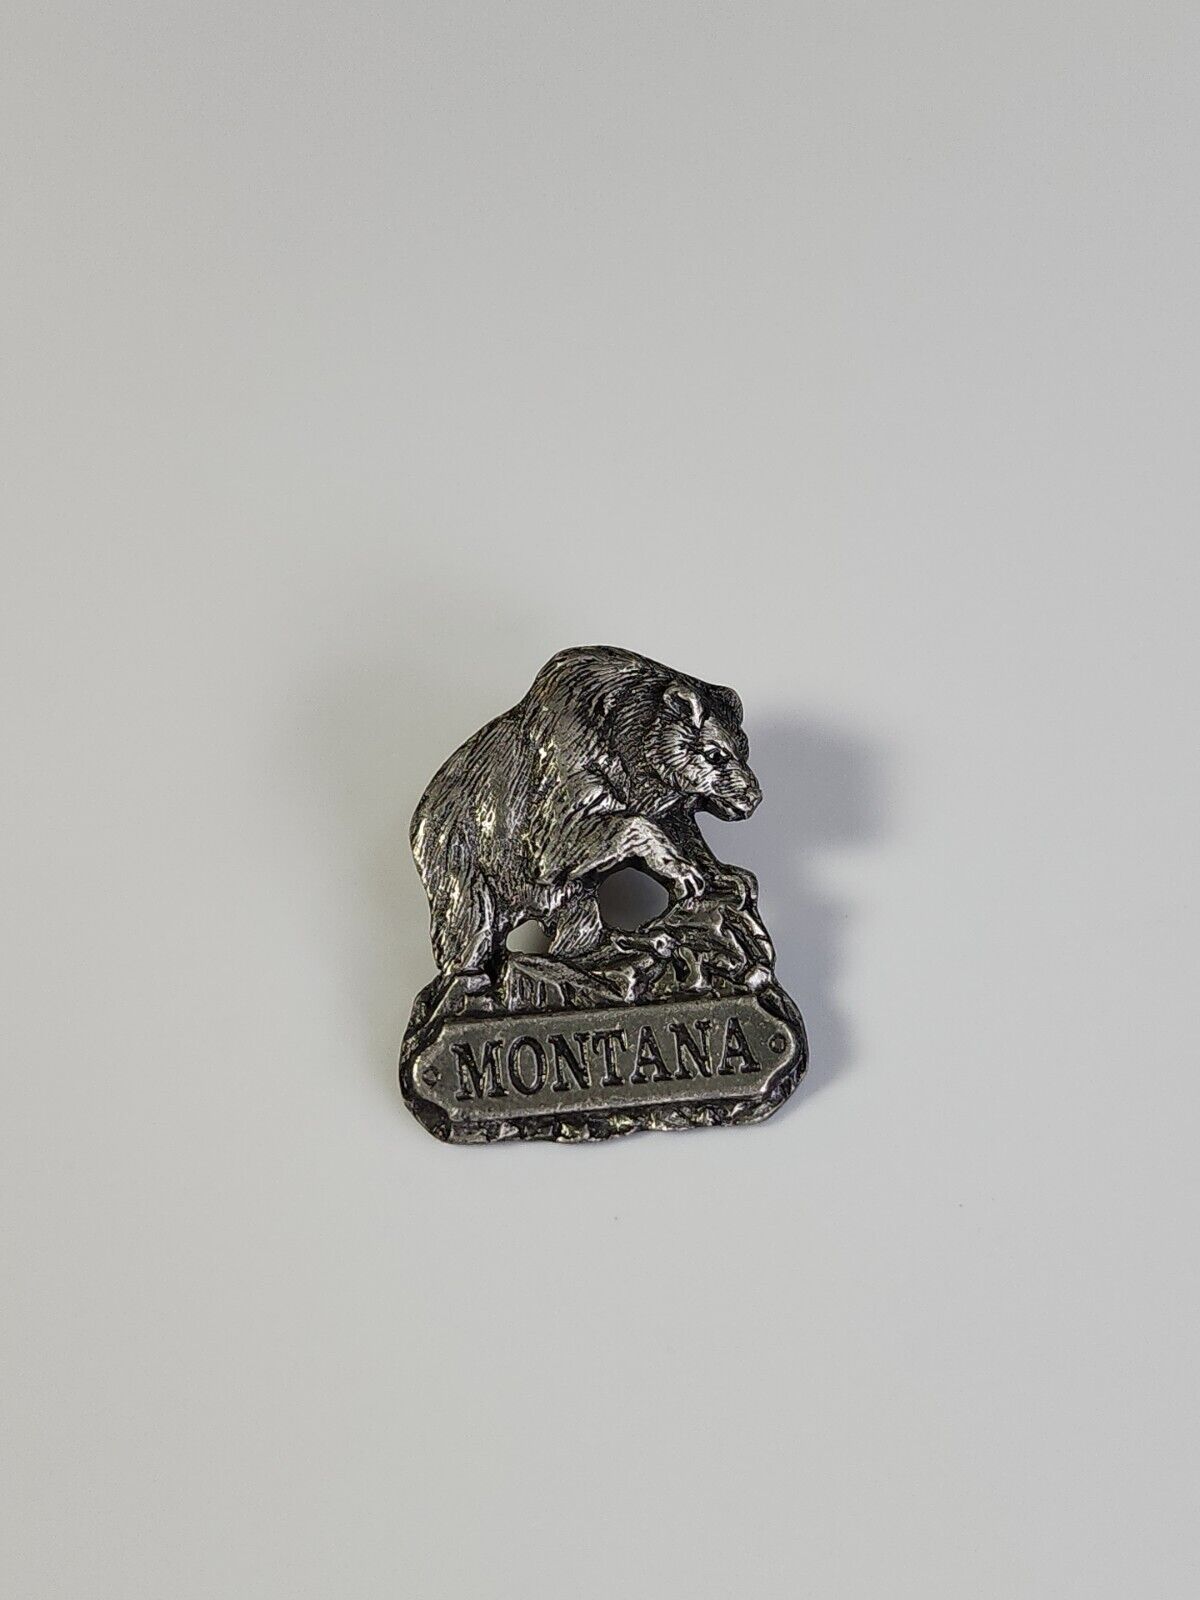 Montana Travel Souvenir Lapel Pin Pewter by Siskiyou Bear Intricate Design